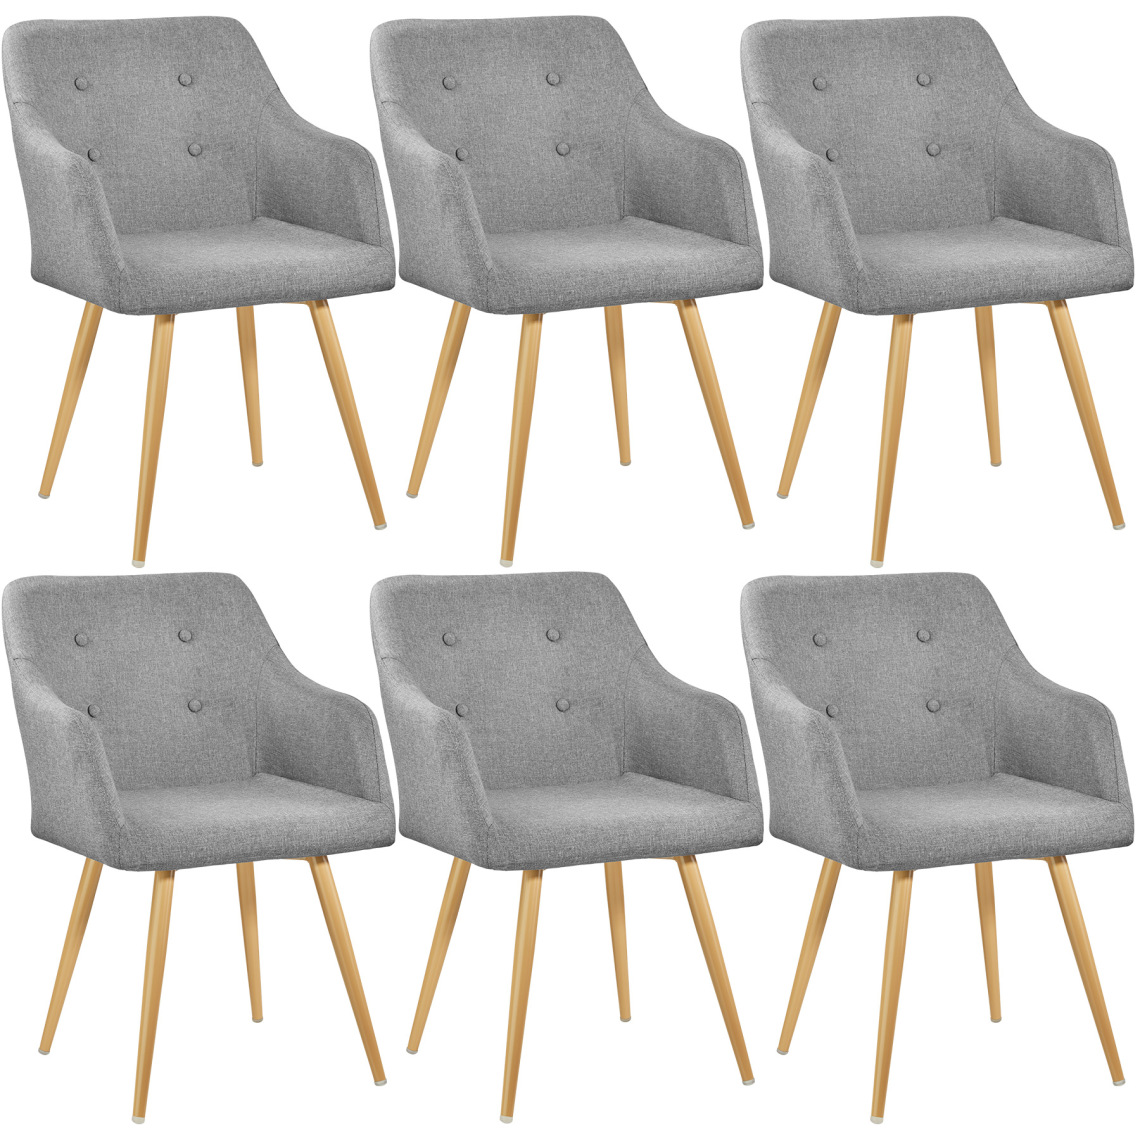 Tectake - Lot de 6 chaises style scandinave TANJA - gris - Chaises